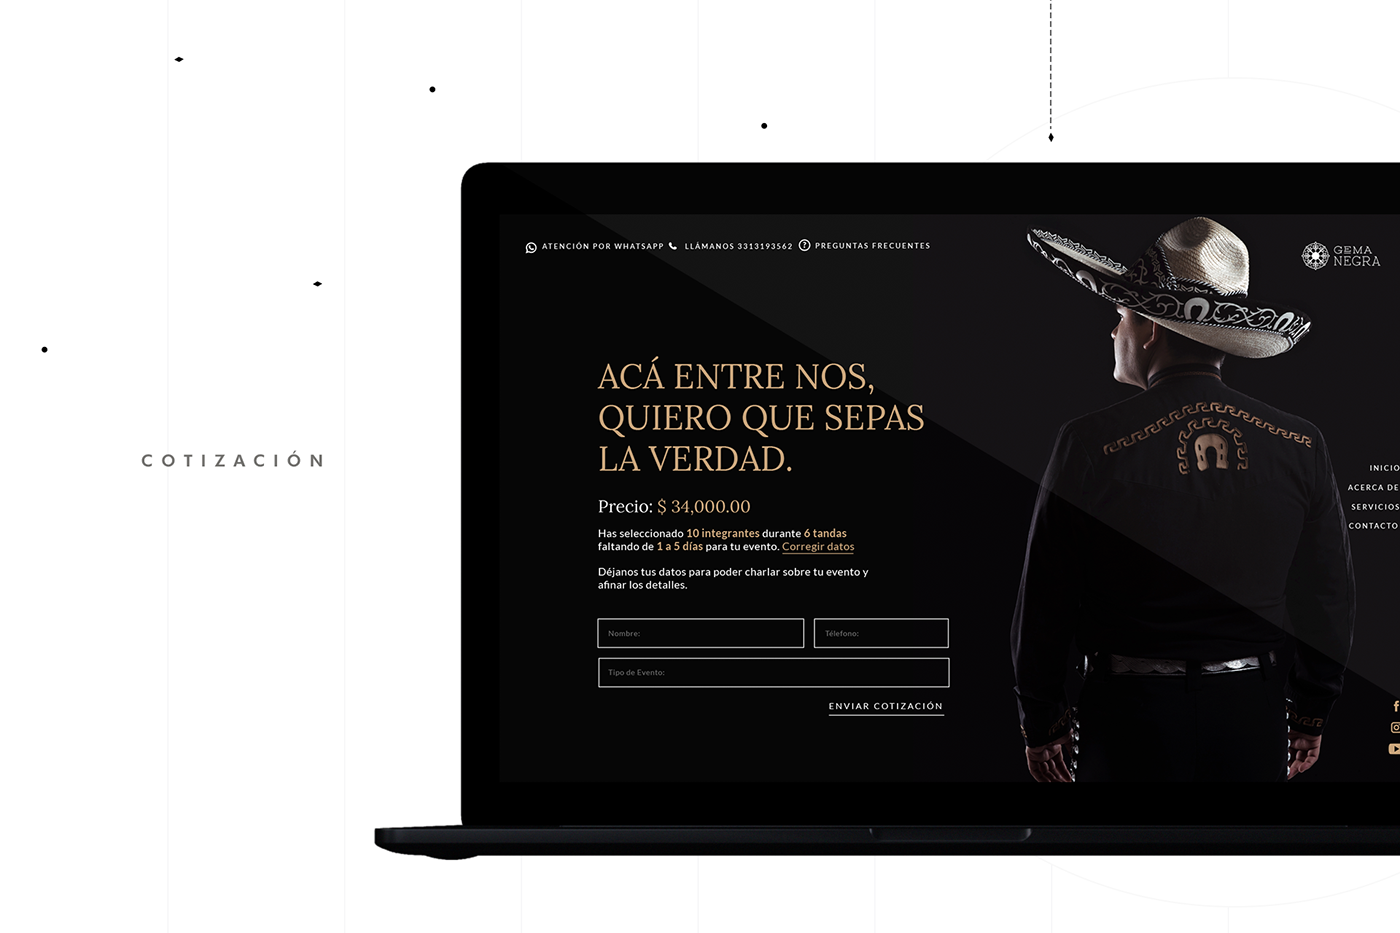 Diseño web Web Design  interfaz landing page One Page UI ux Website mariachi music